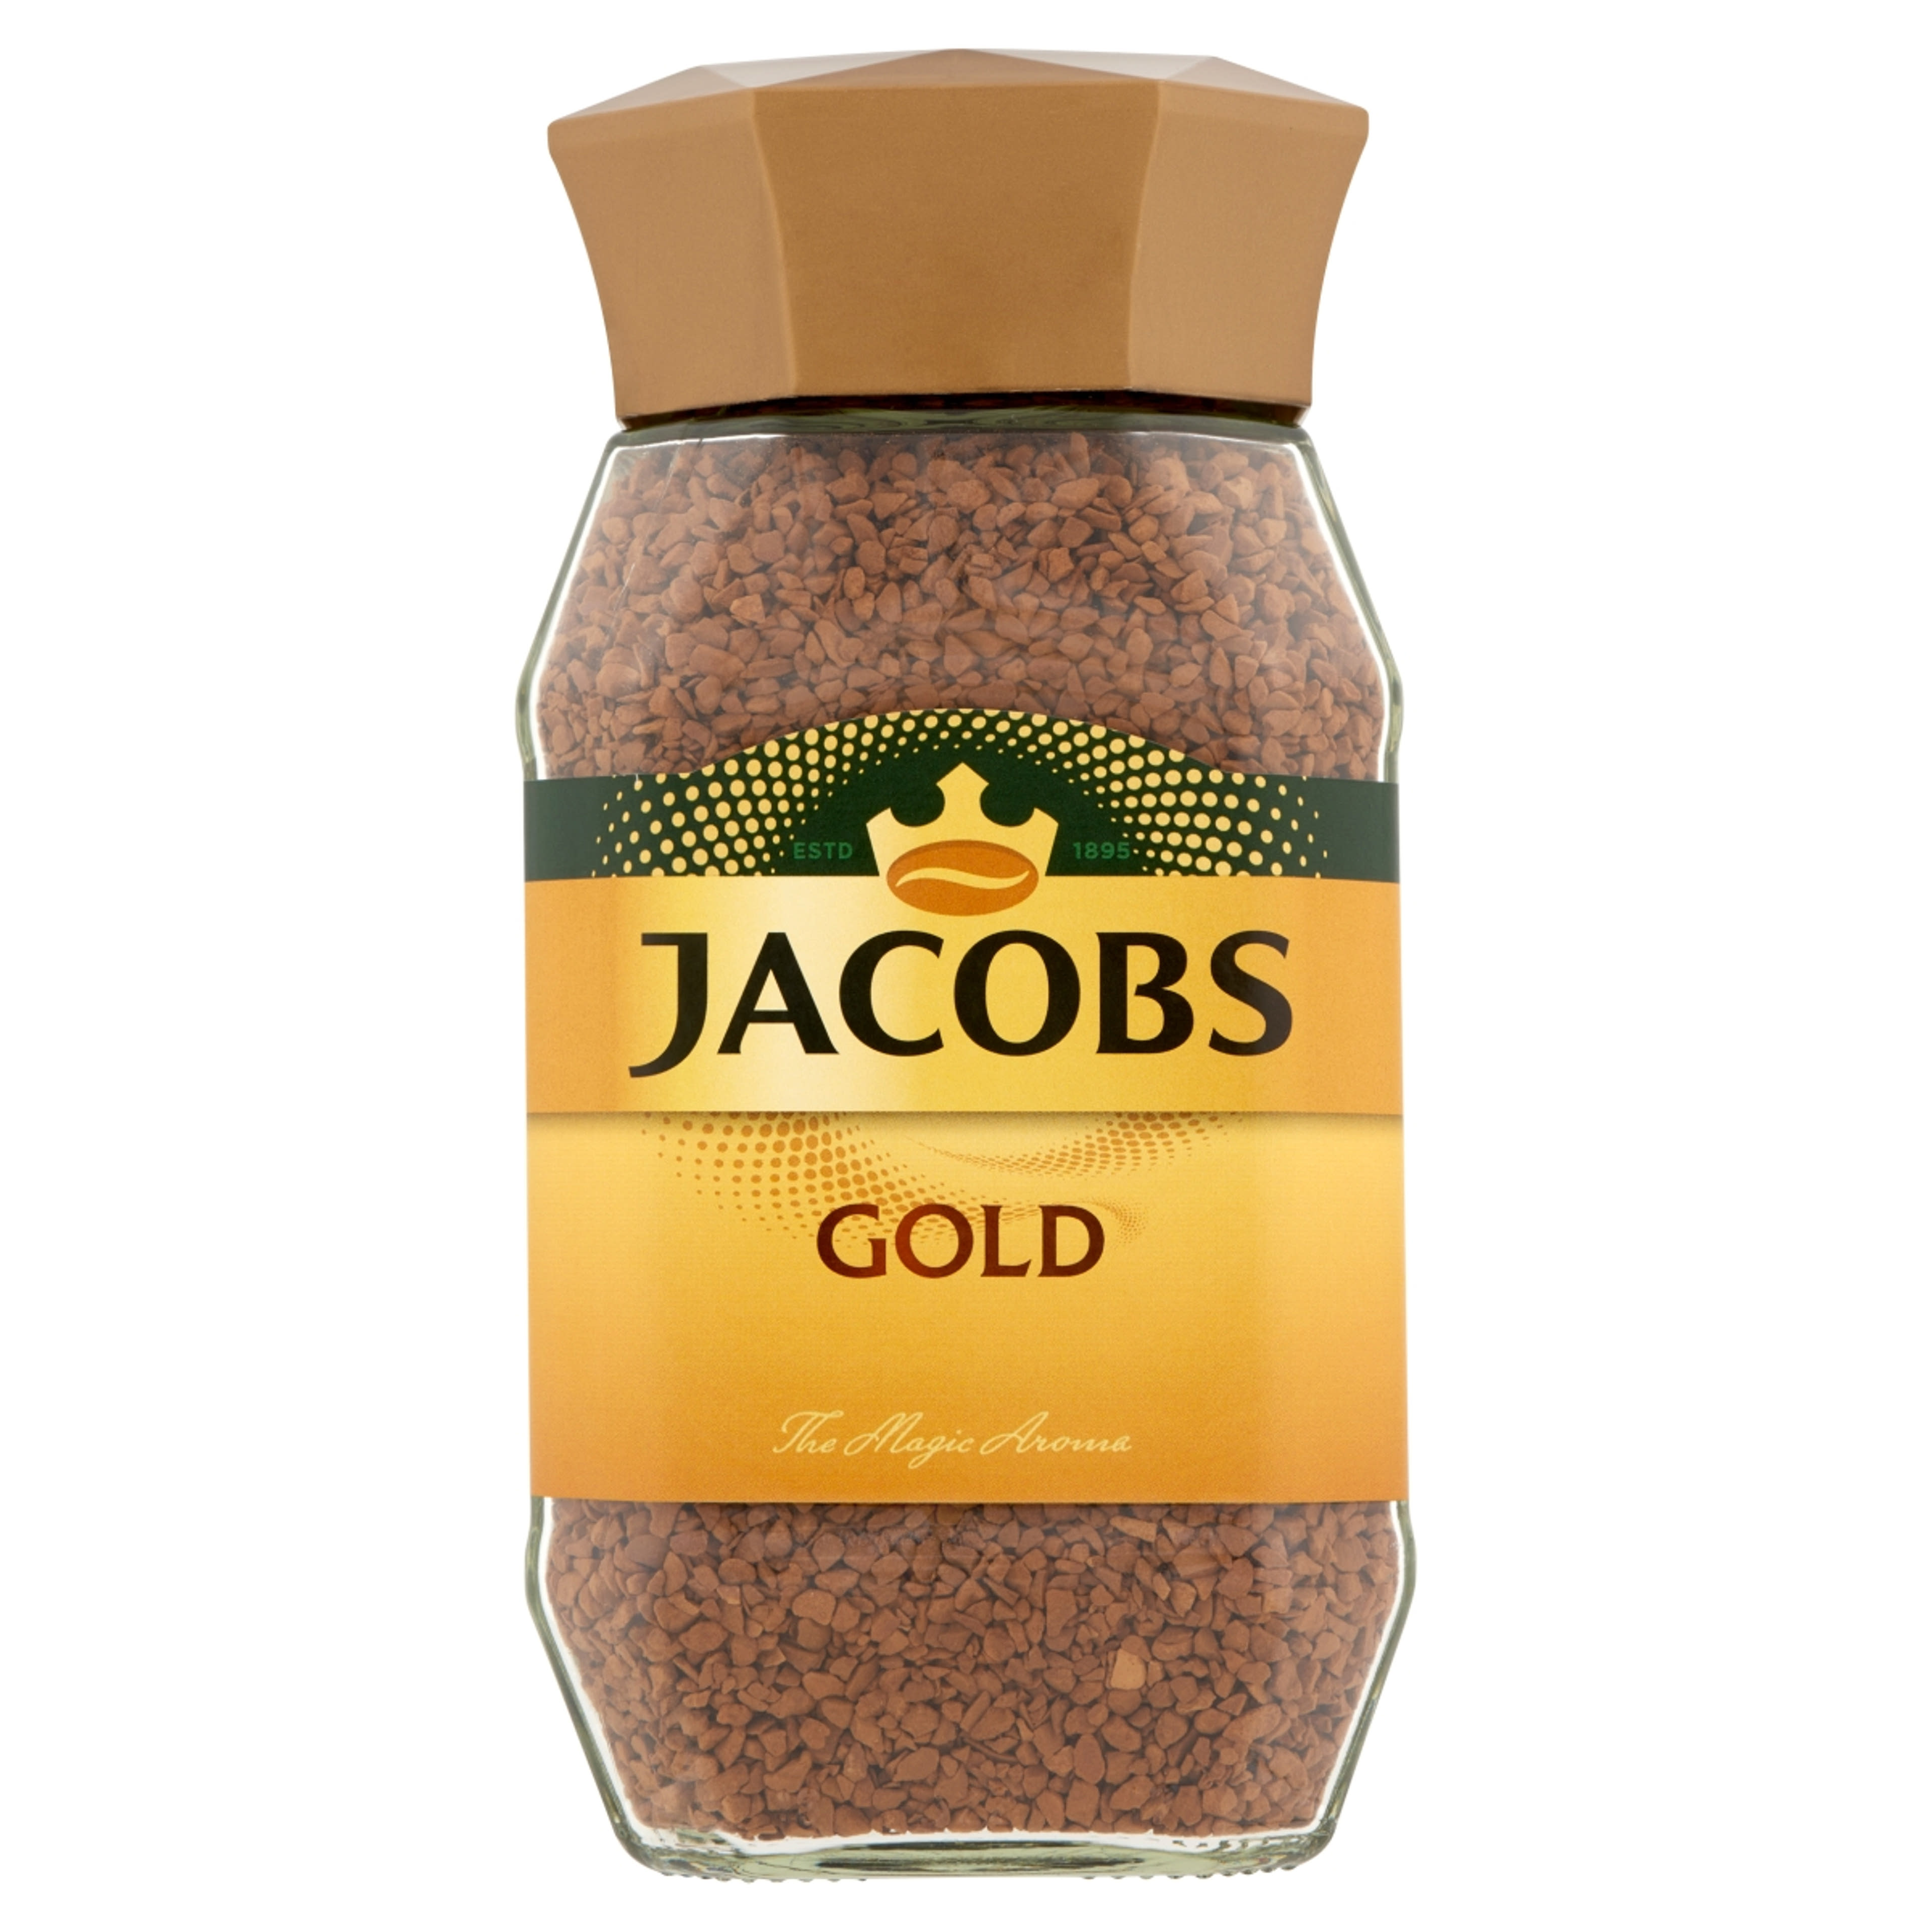 Jacobs Gold üveges instant kávé - 200 g-1